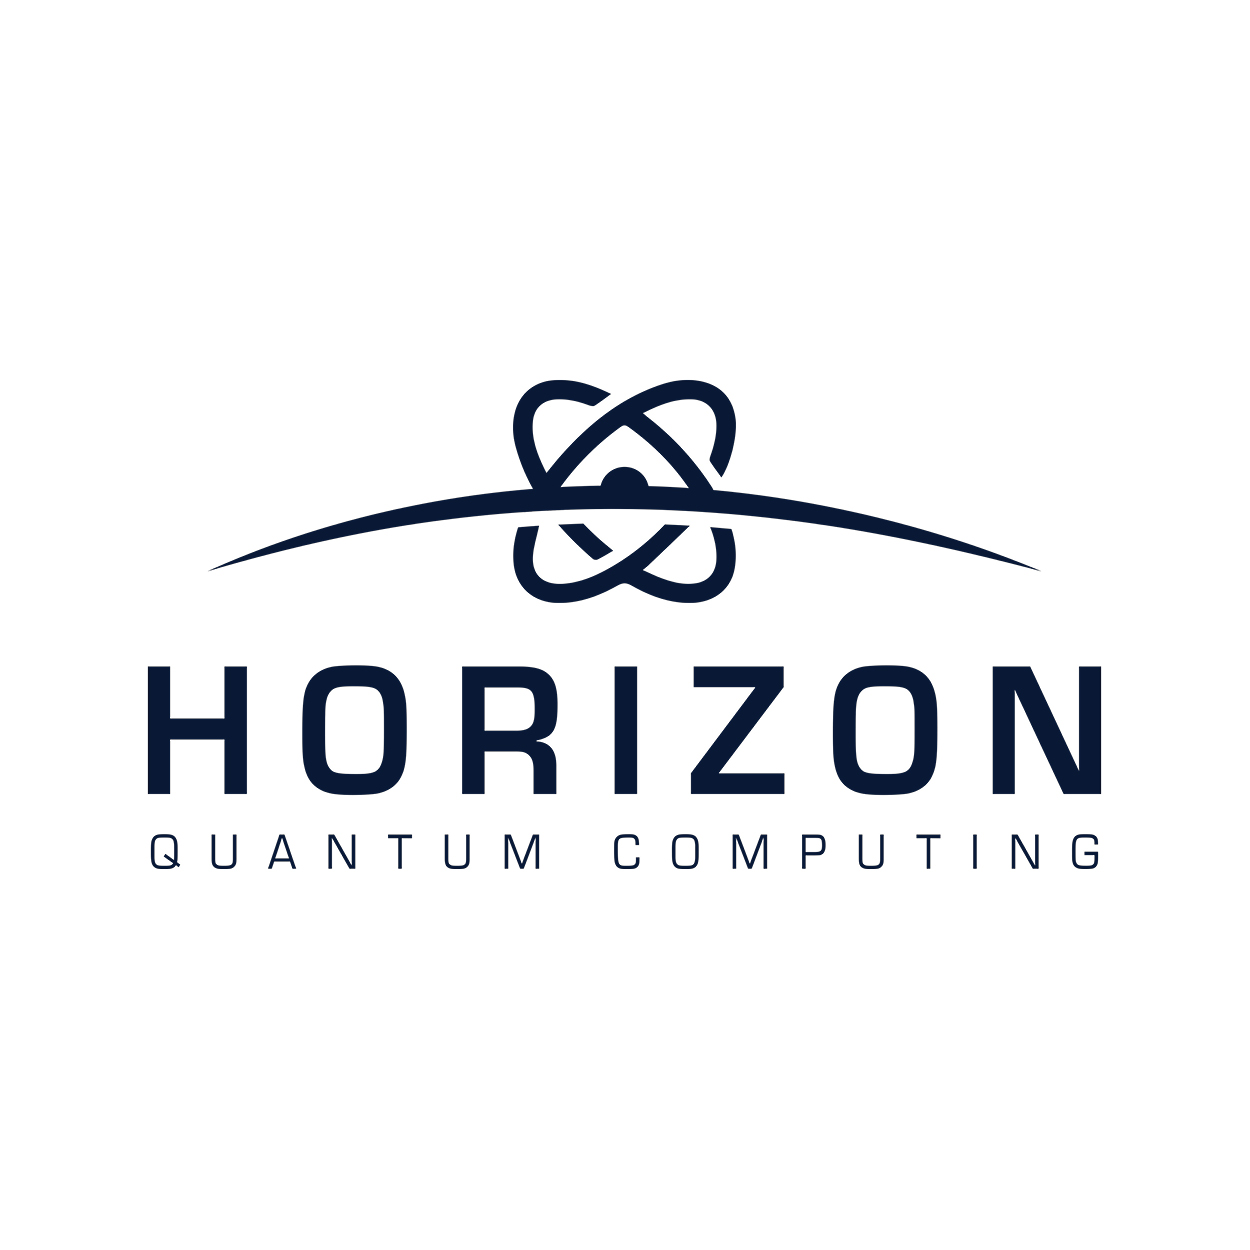 logo_horizon